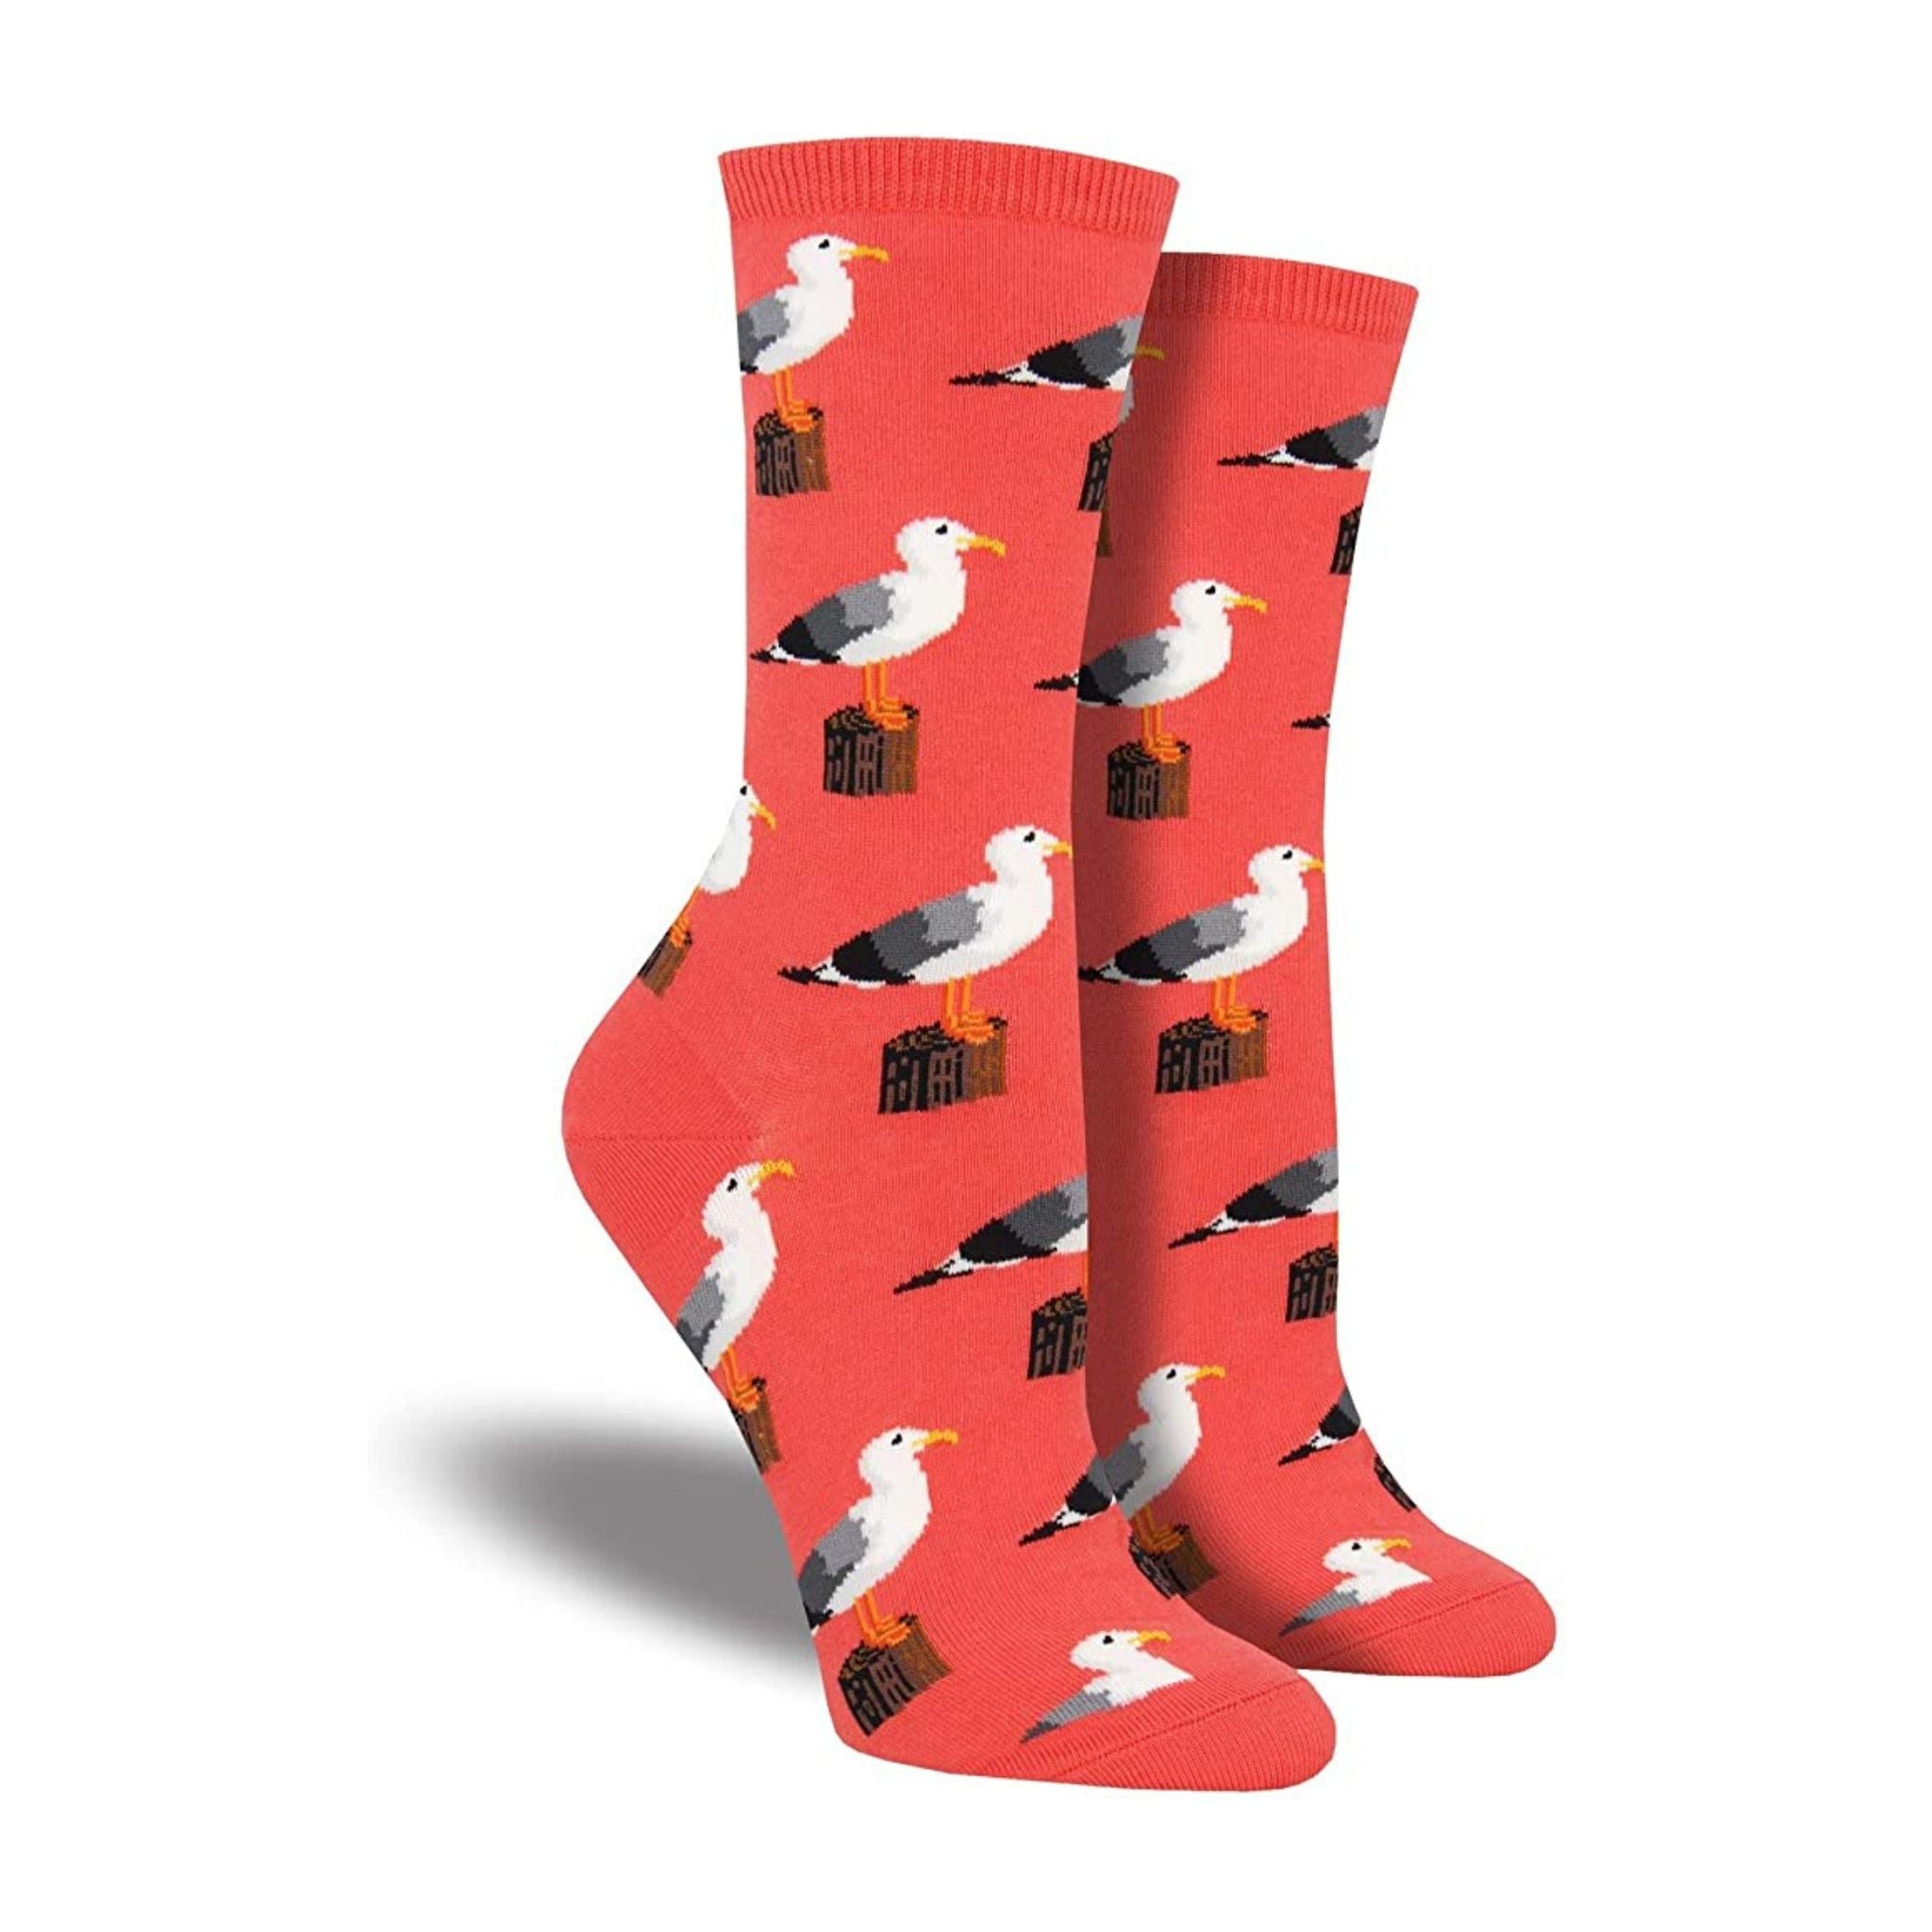 Peach Socks with seagulls on them